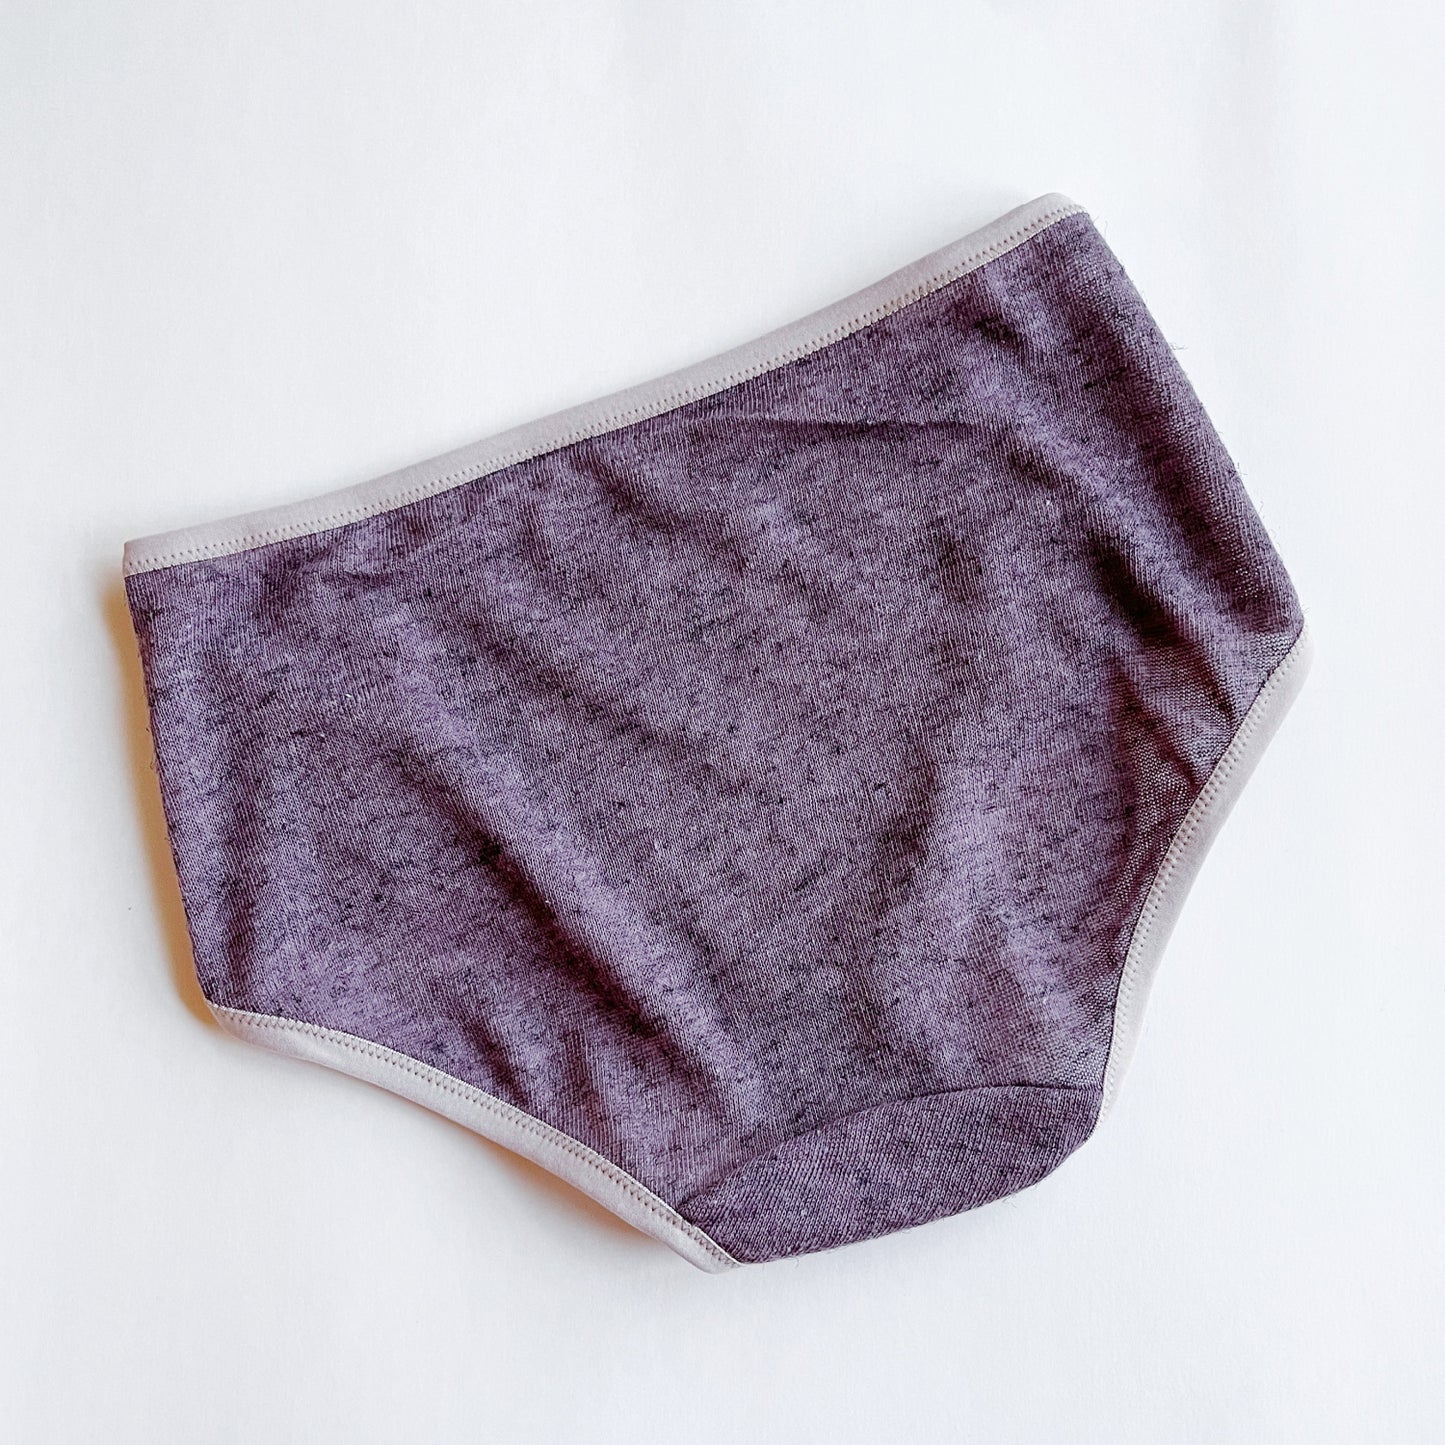 Mauve Linen panty underwear brief | Buy 100% linen underwear for women | Made in Canada linen lingerie + clothing shop | Econica